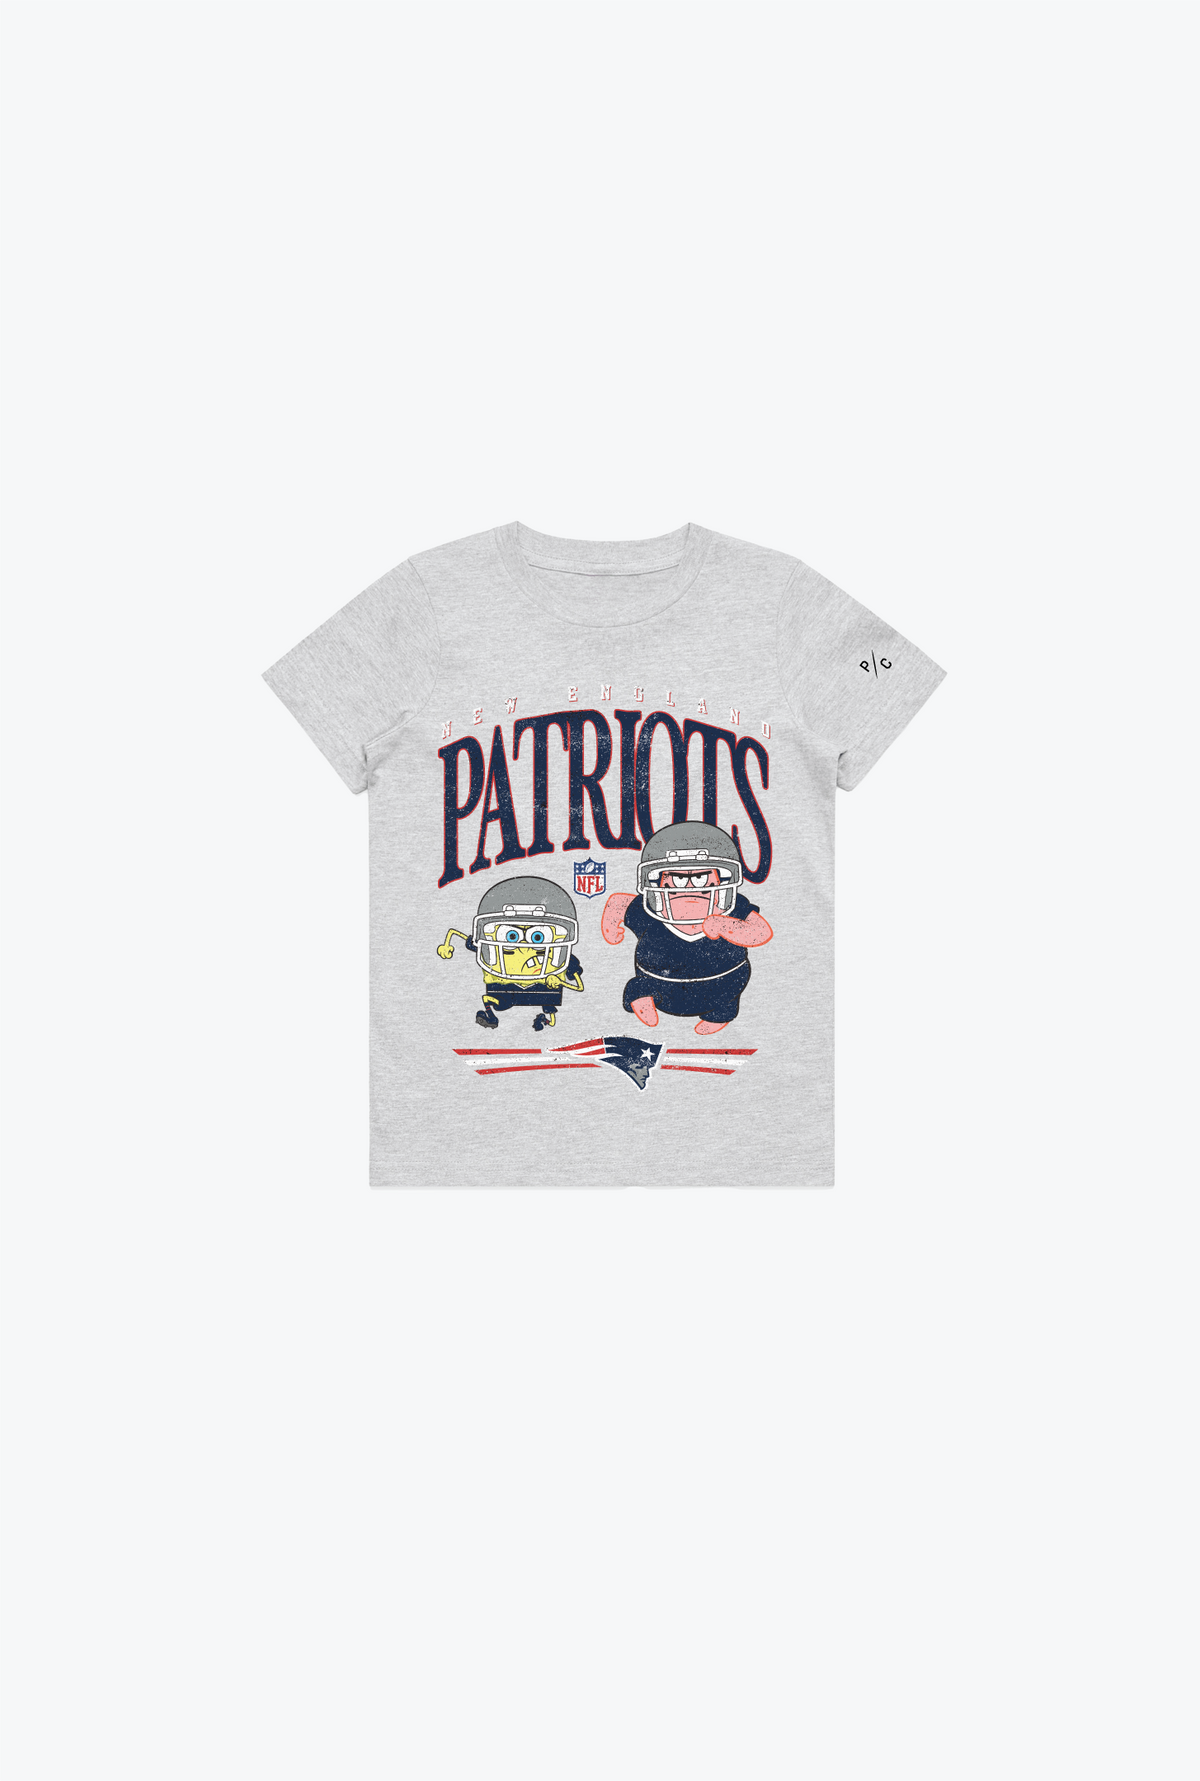 Spongebob & Patrick Rush Kids T-Shirt - New England Patriots